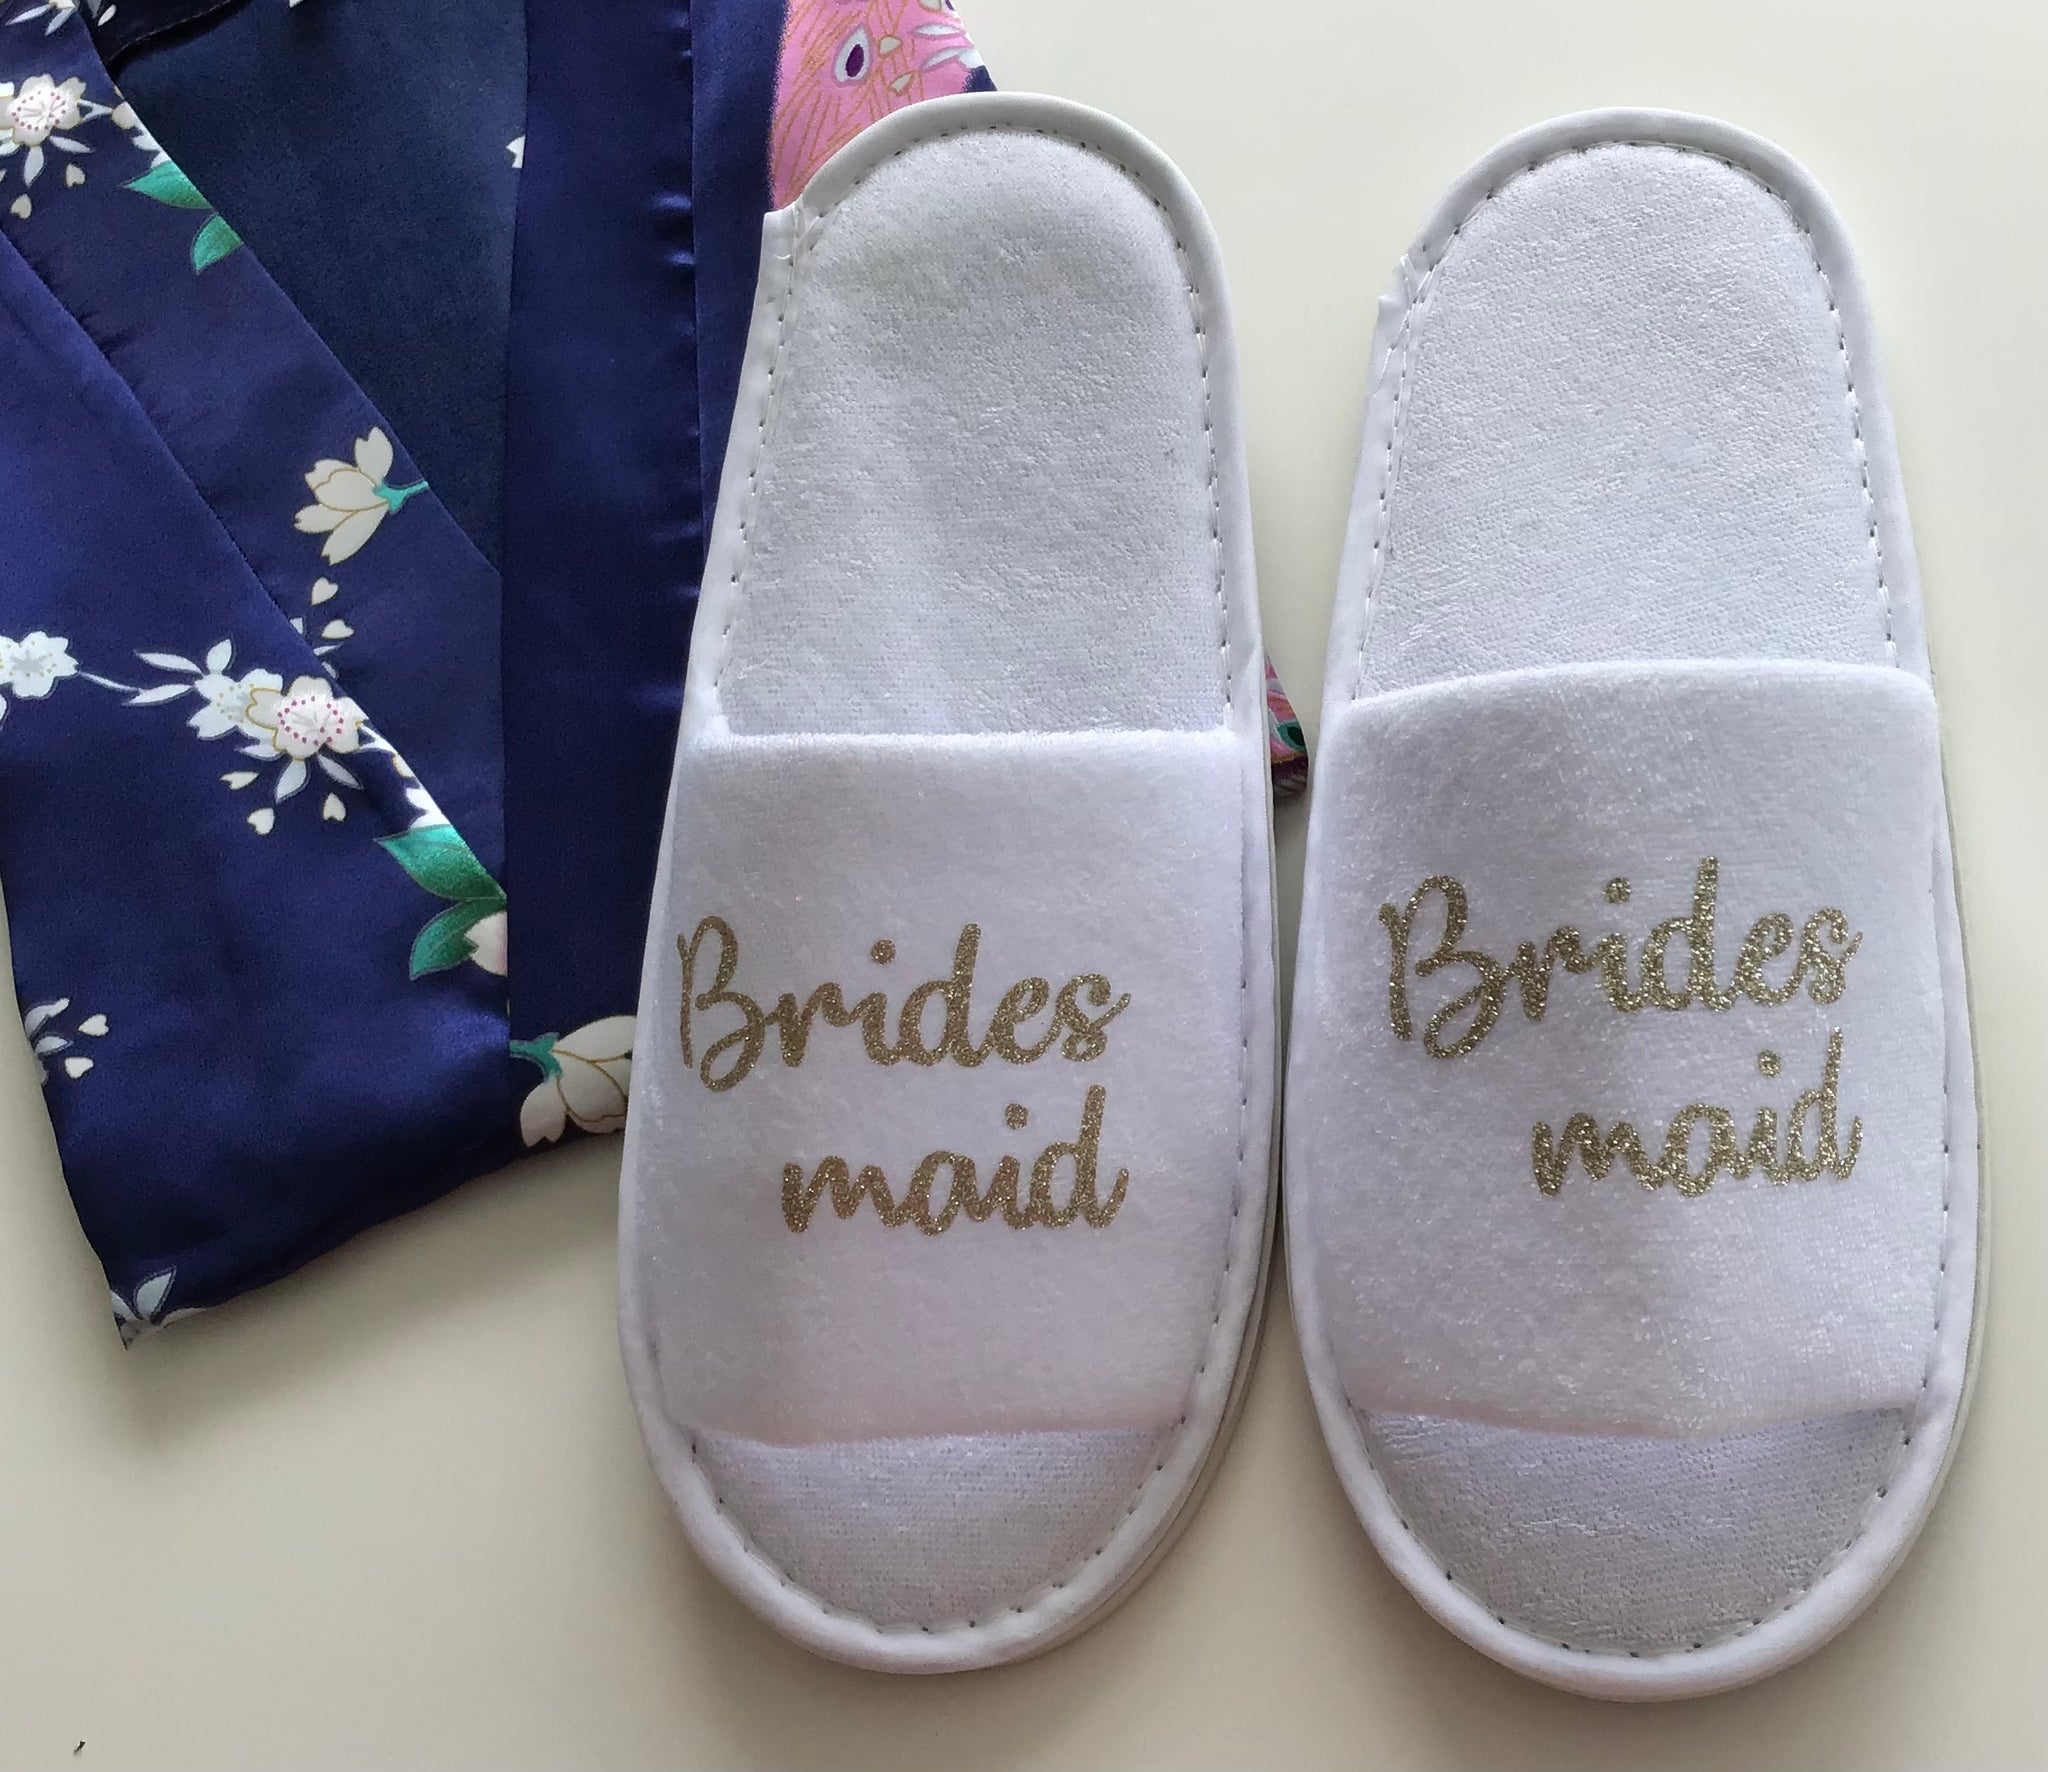 Bridesmaid Slippers - Light Gold Glitter Script, Style C Handmade